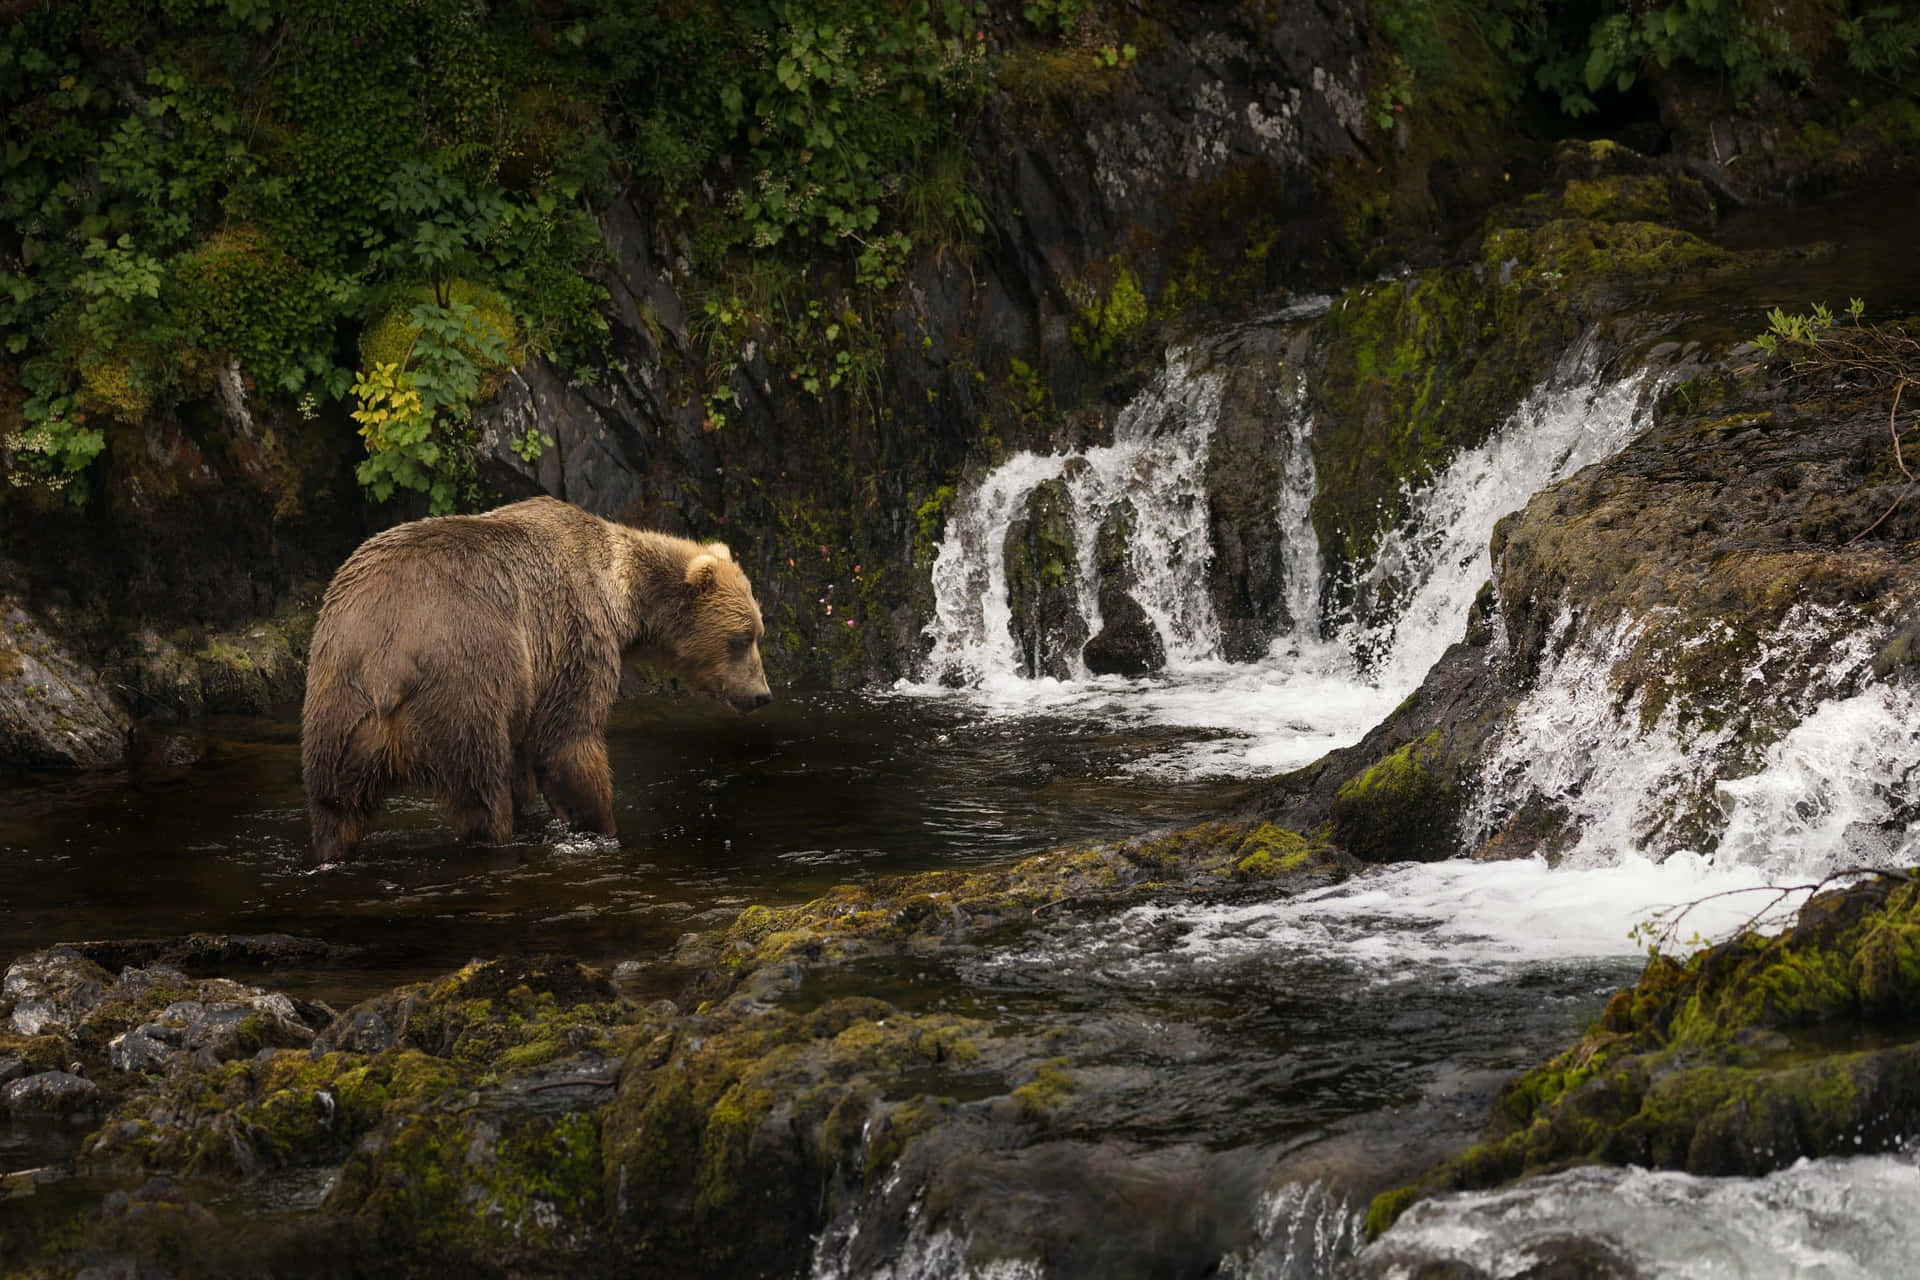 A Kodiak Bear in its Natural Habitat